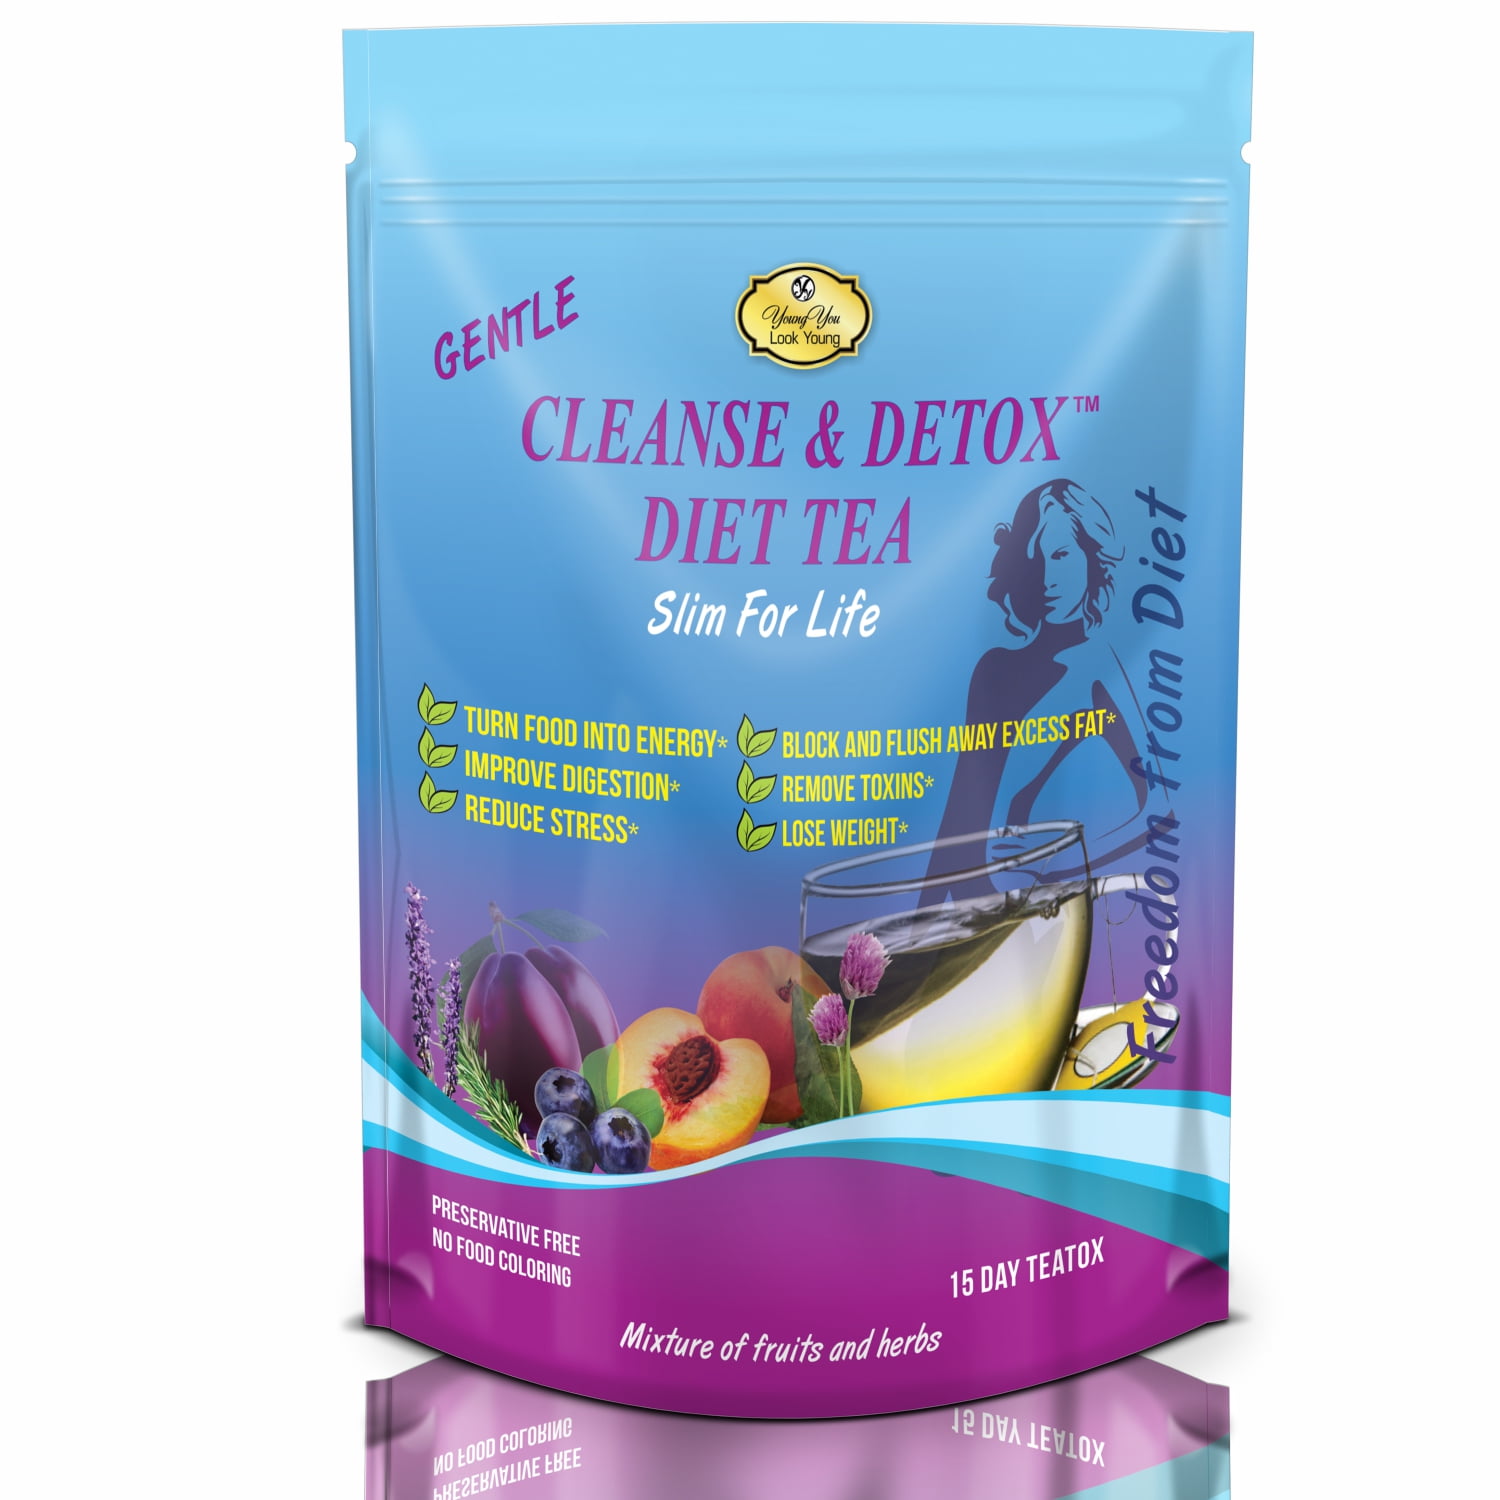 Appetite Control Detox Diet Tea. Weight